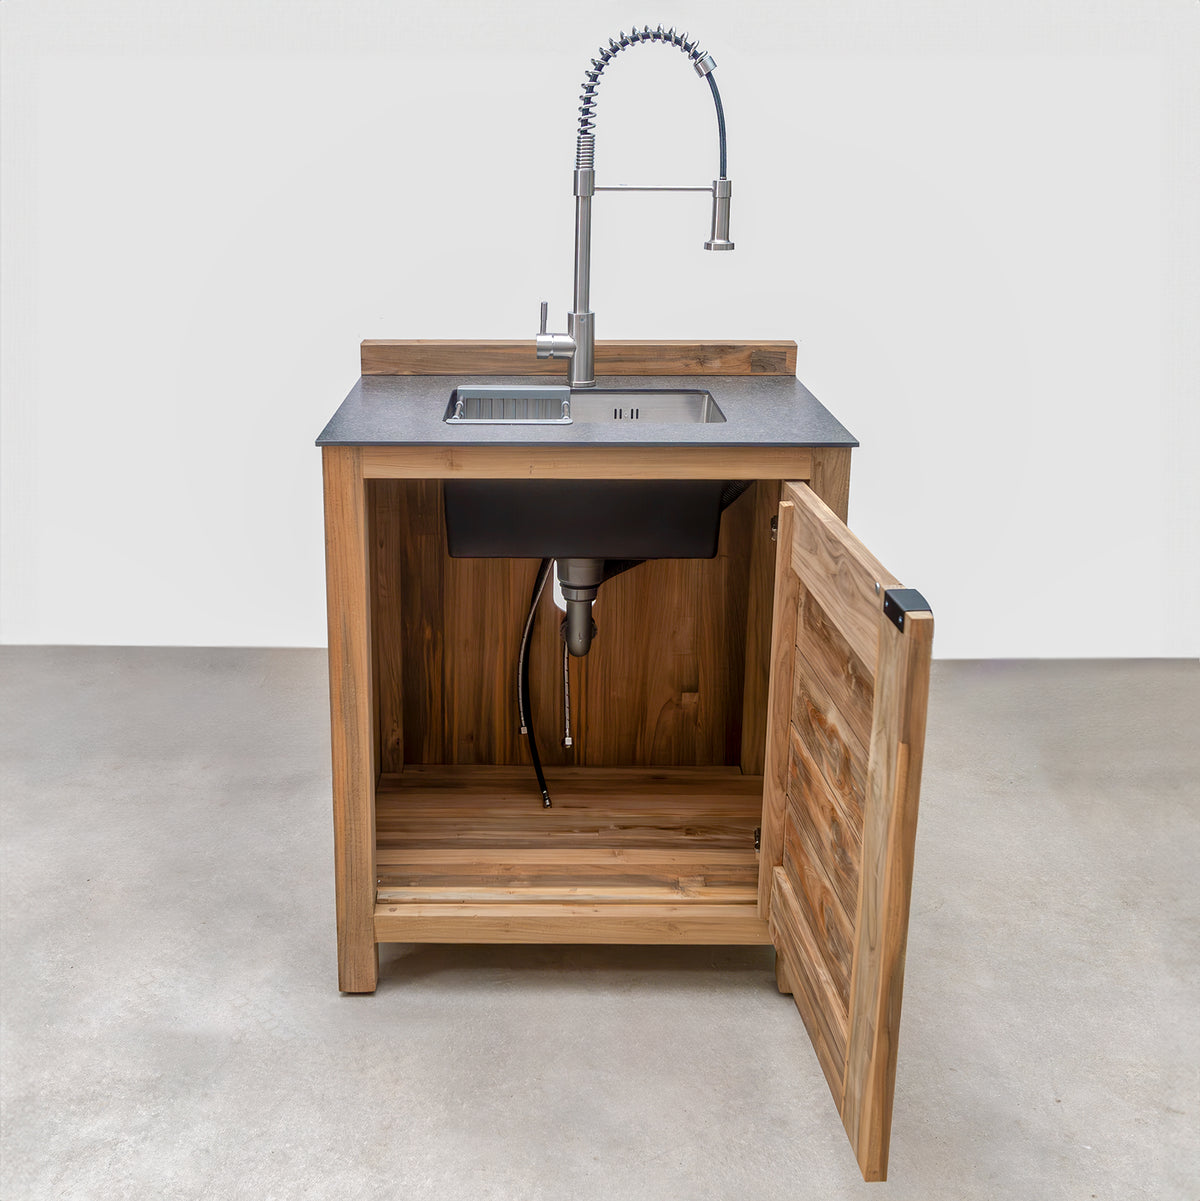 Draco Grills Teak 6 Burner Outdoor Kitchen with Modular Double Fridge, Corner Cabinet, Sink